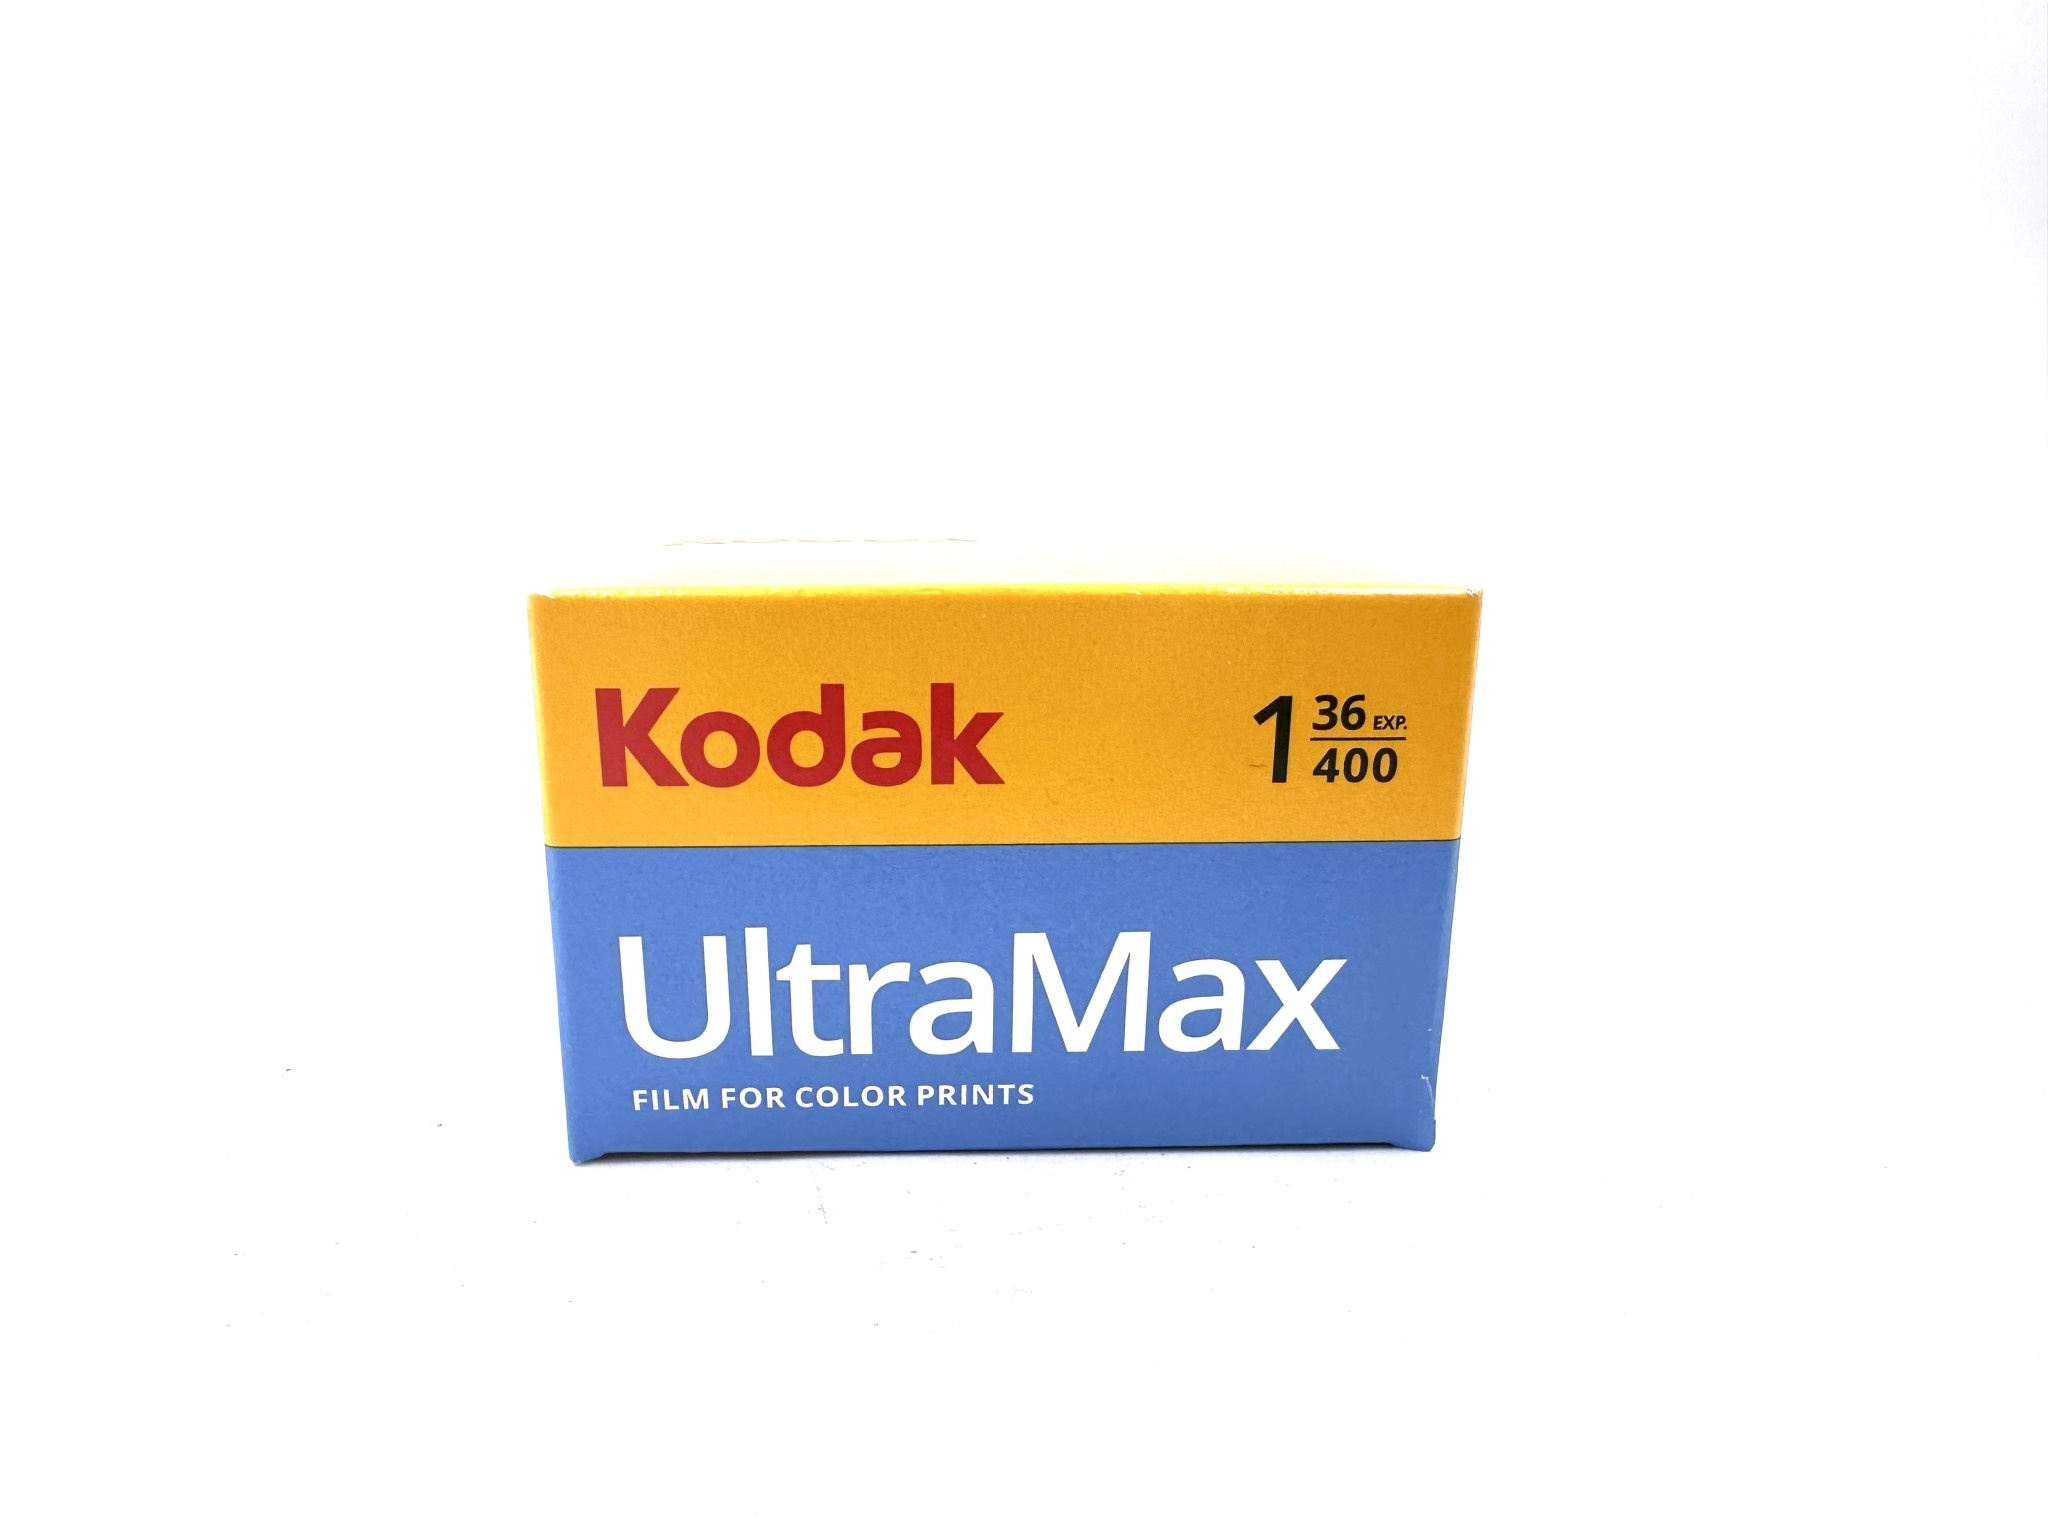 Ultramax 400 Film Reviews & Photos - The Darkroom Photo Lab